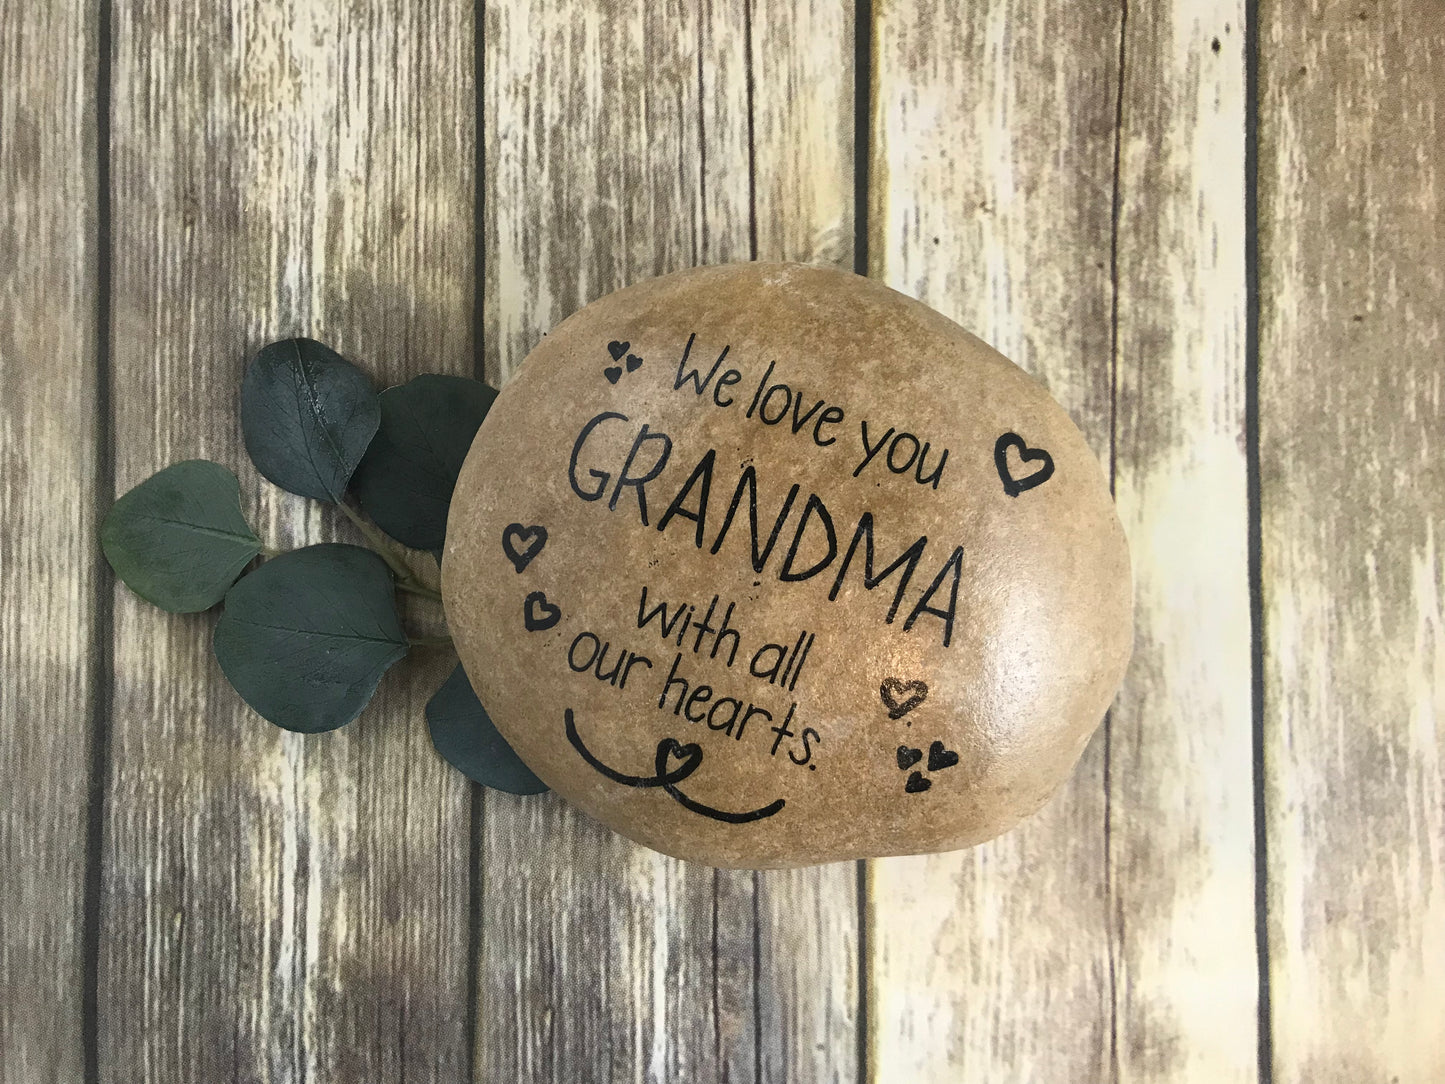 Large Decorative Garden Stone - Grandma Hearts